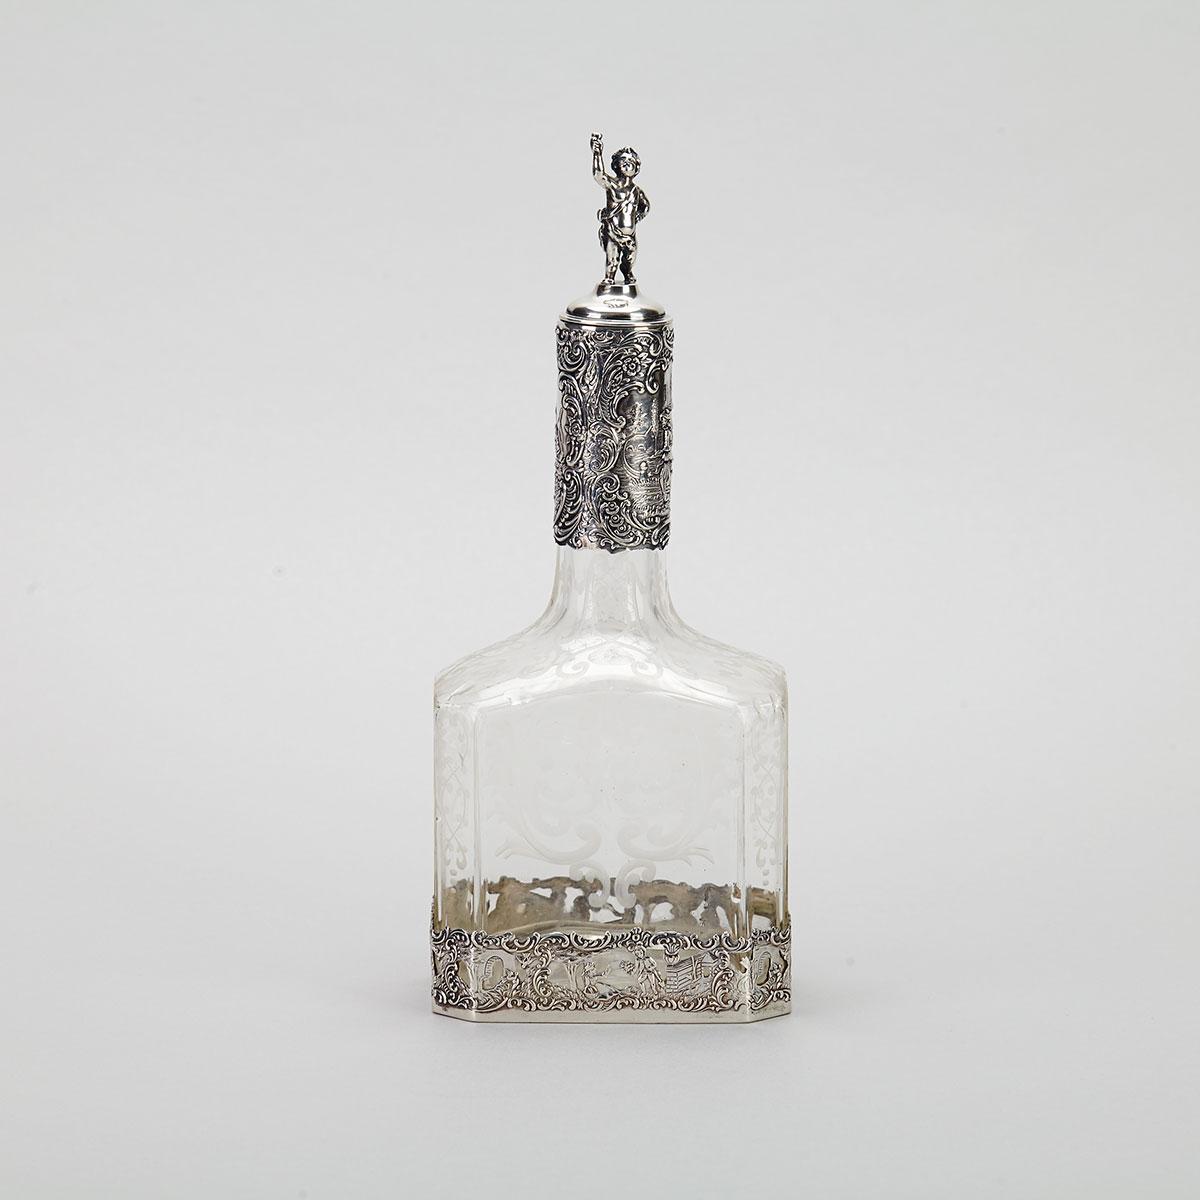 German Silver Mounted Etched Glass Decanter, Johann Kurz, Hanau, c.1900